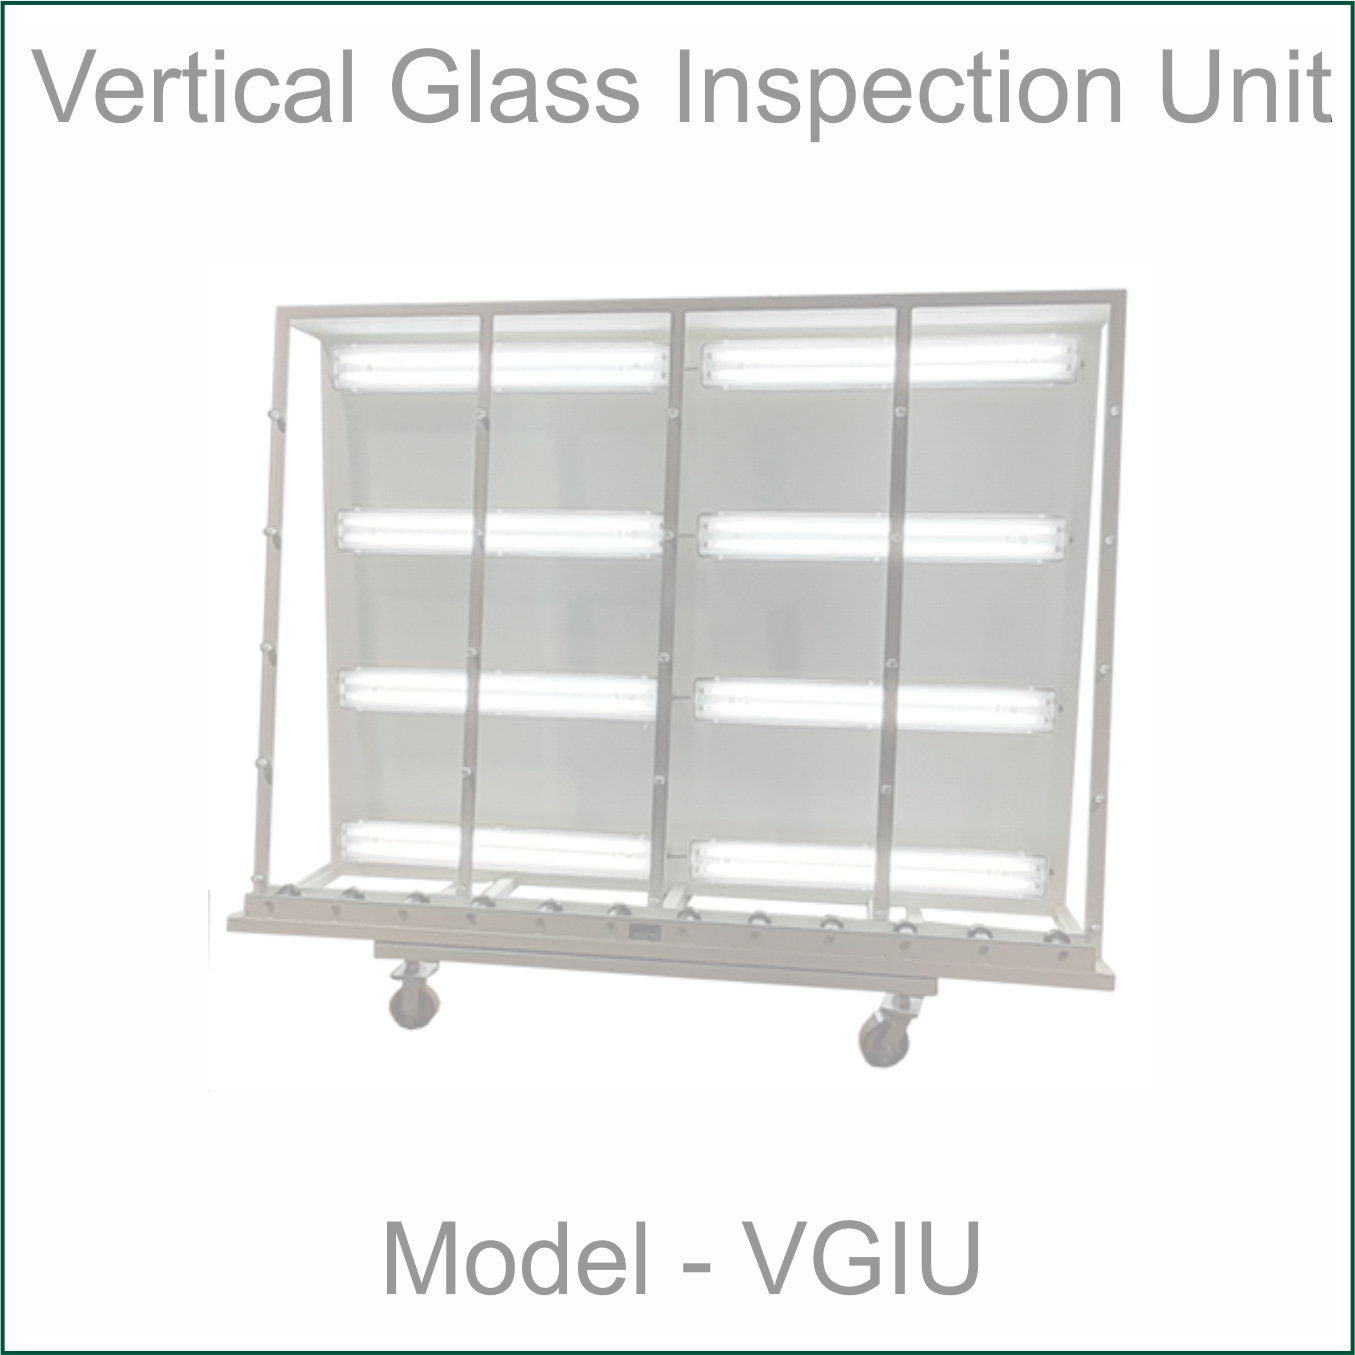 Vertical Glass Inspection Unit